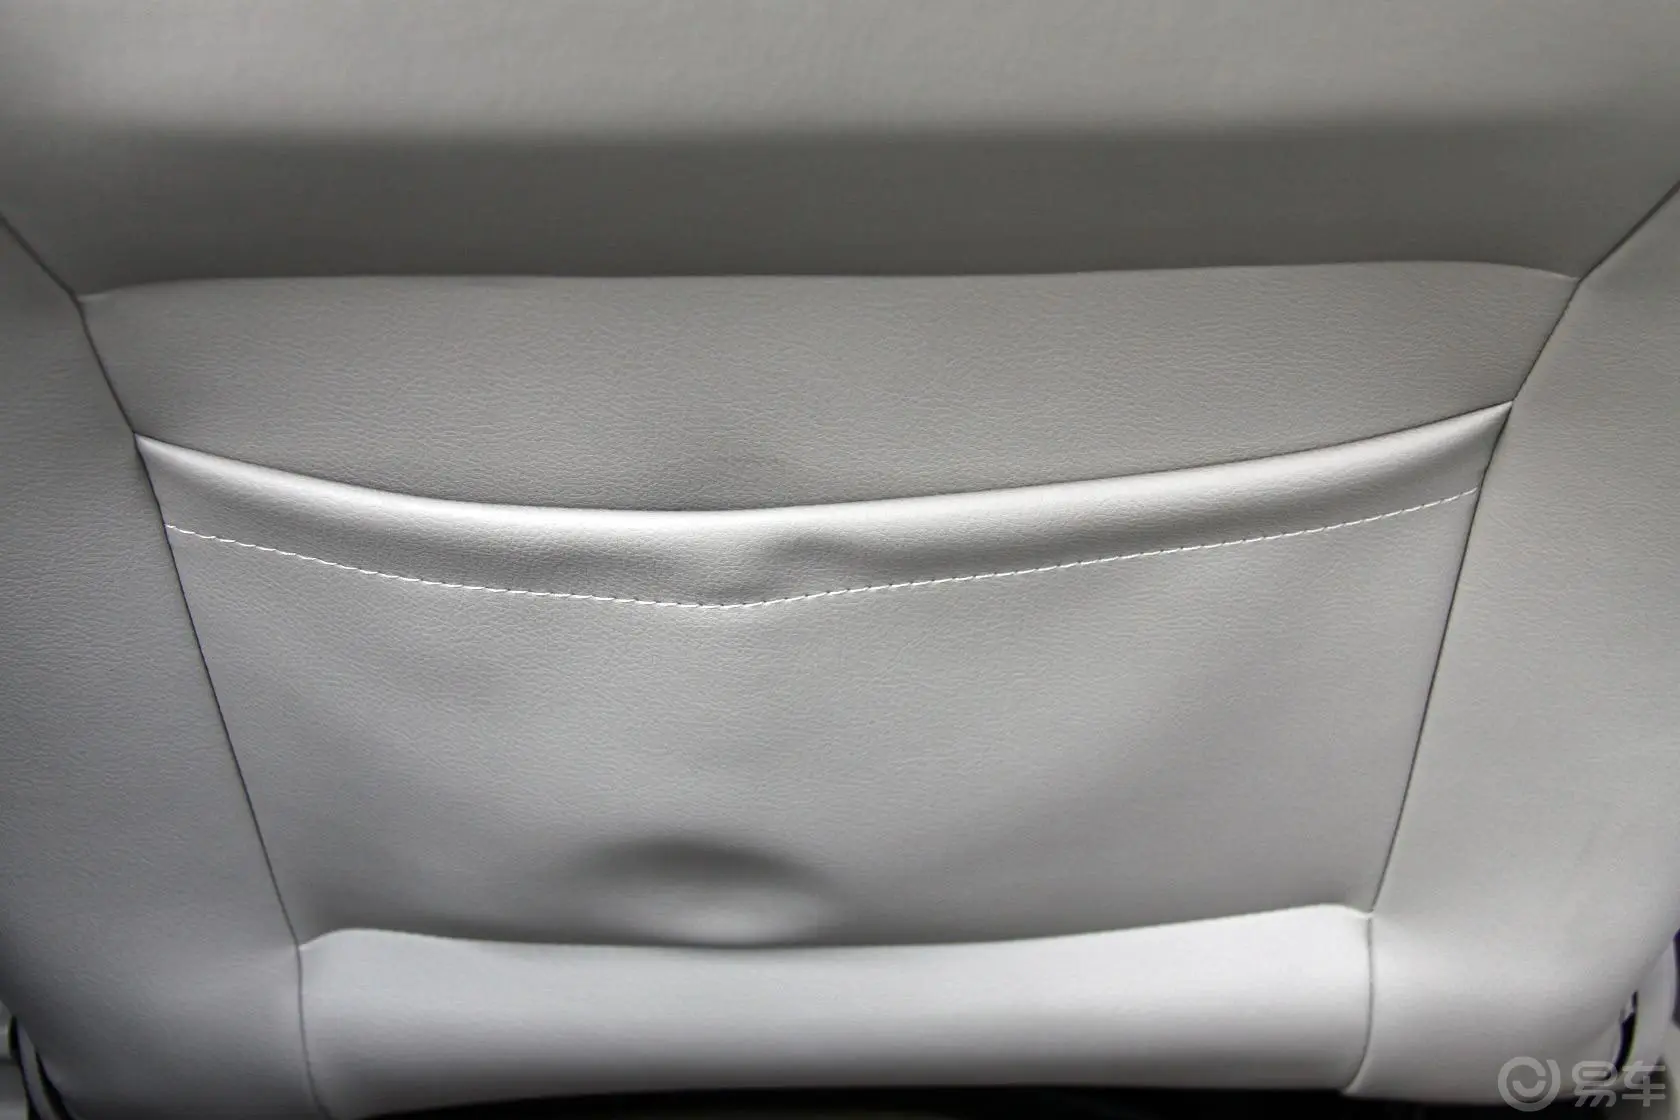 Polo劲取 1.6L 自动 实酷版前排座椅后储物袋